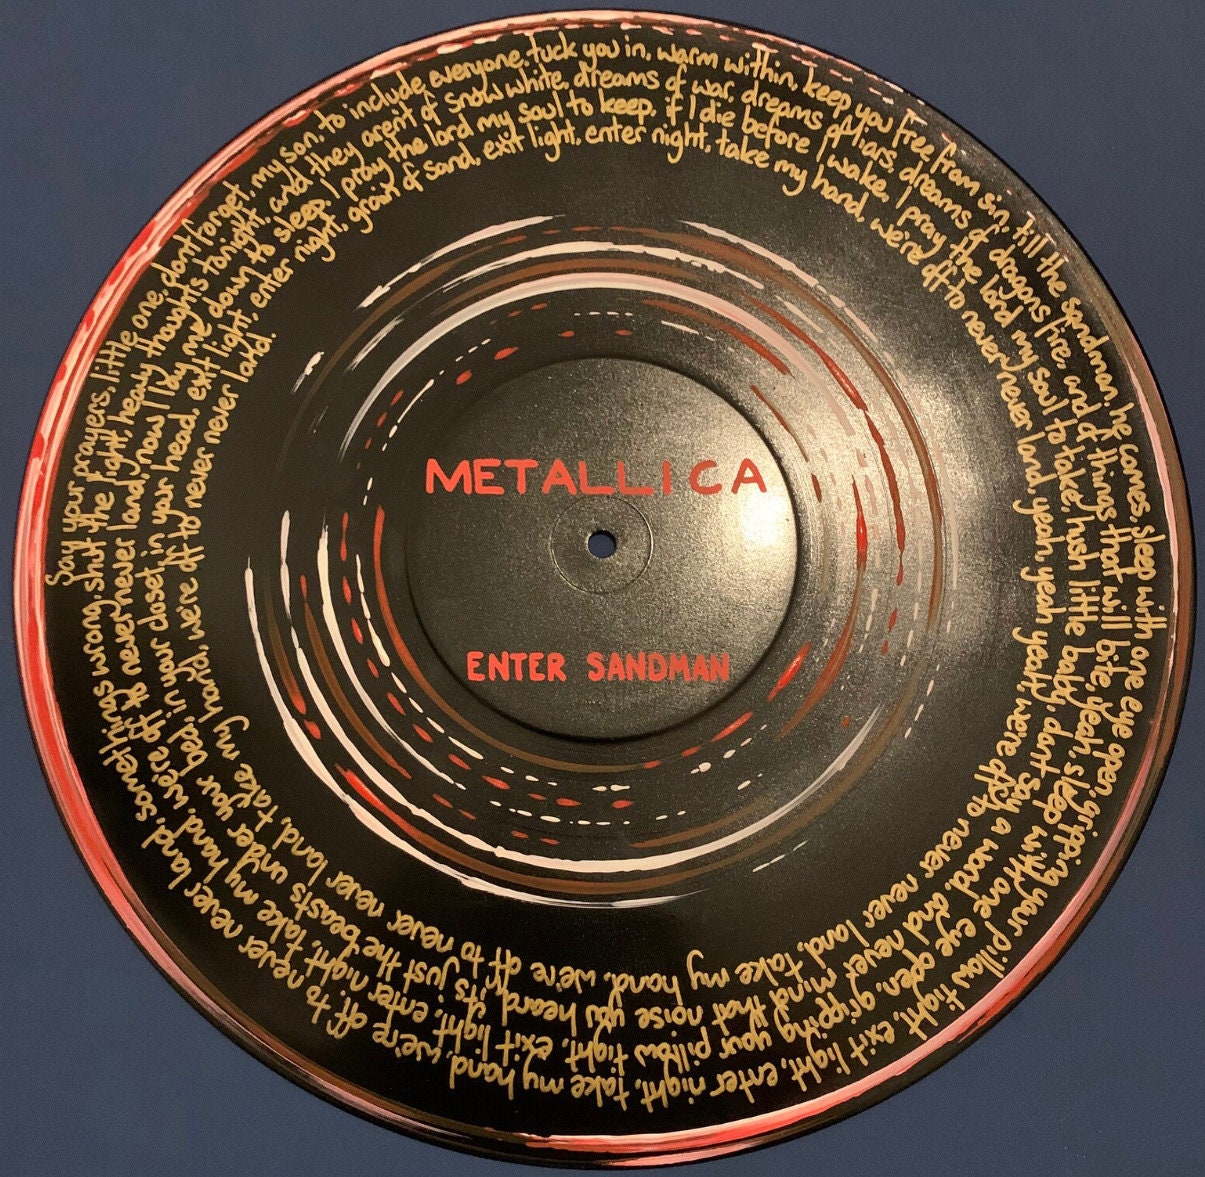 Metallica Ltd Edition Reproduction Signature Gold Record Display - Gold  Record Outlet Album and Disc Collectible Memorabilia